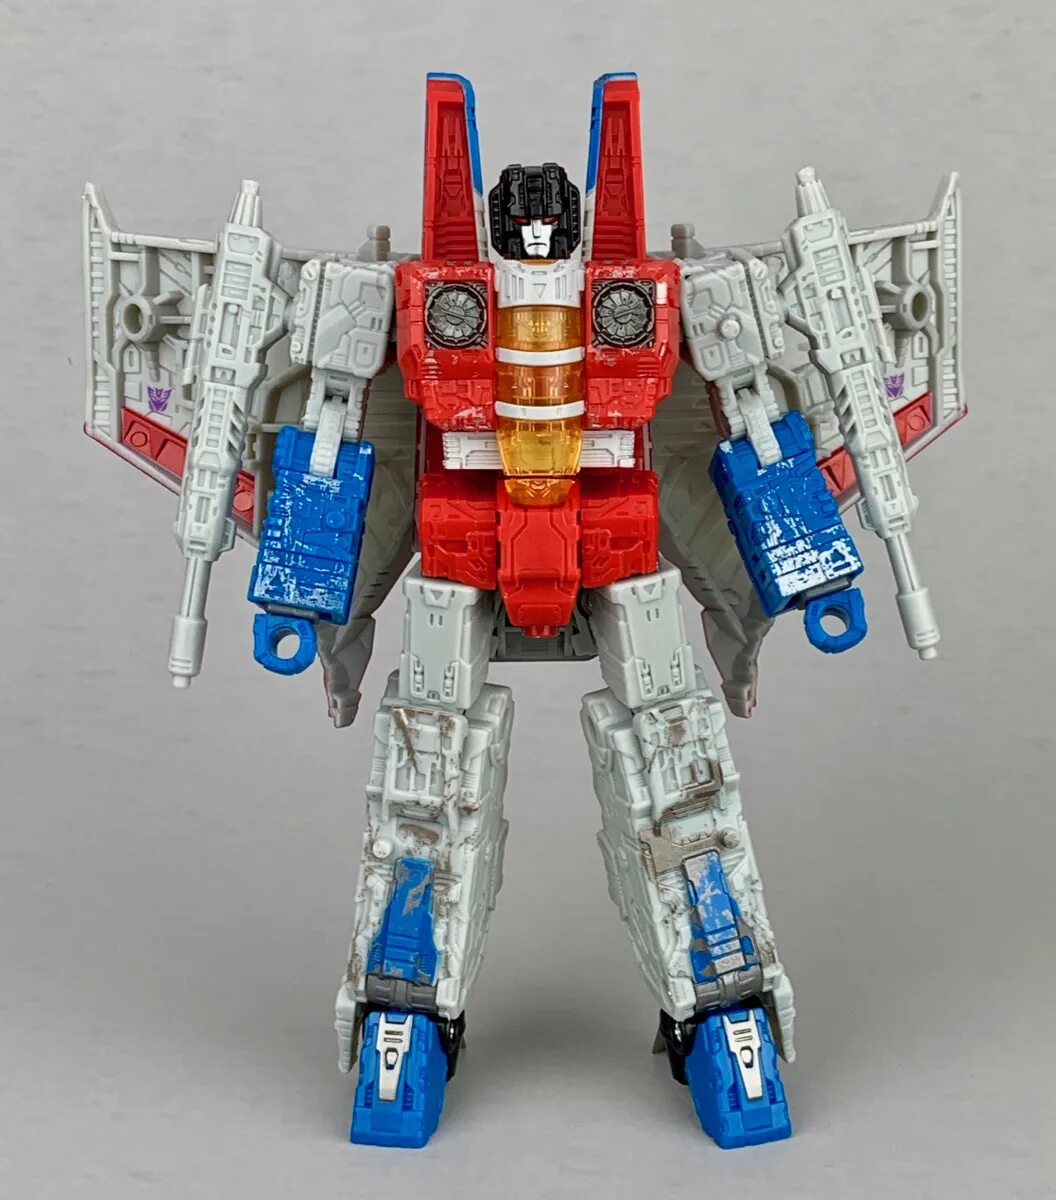 Transformers siege. Transformers Siege Старскрим. Transformers Siege Starscream Toys. Starscream Transformers Hasbro leader. Siege Starscream.